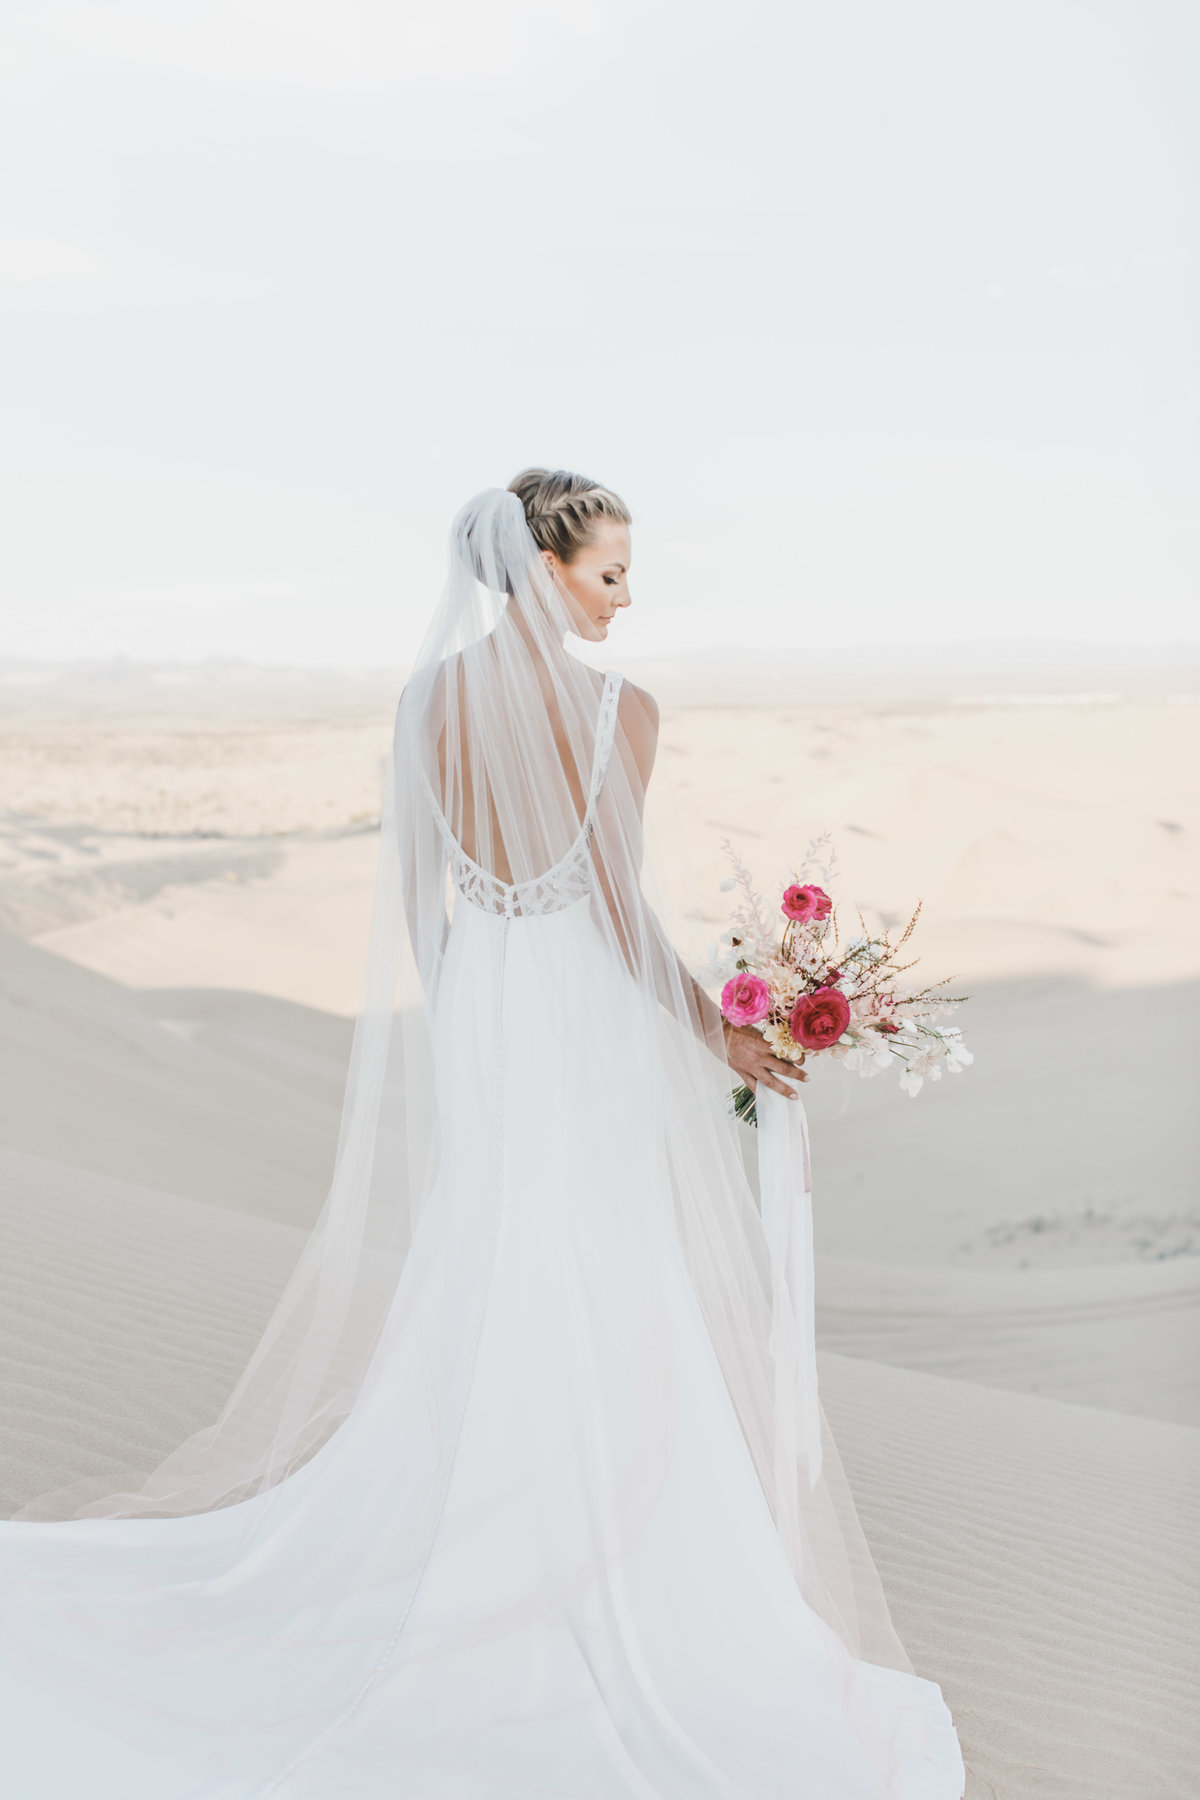 I am a California wedding photographer based in San Diego